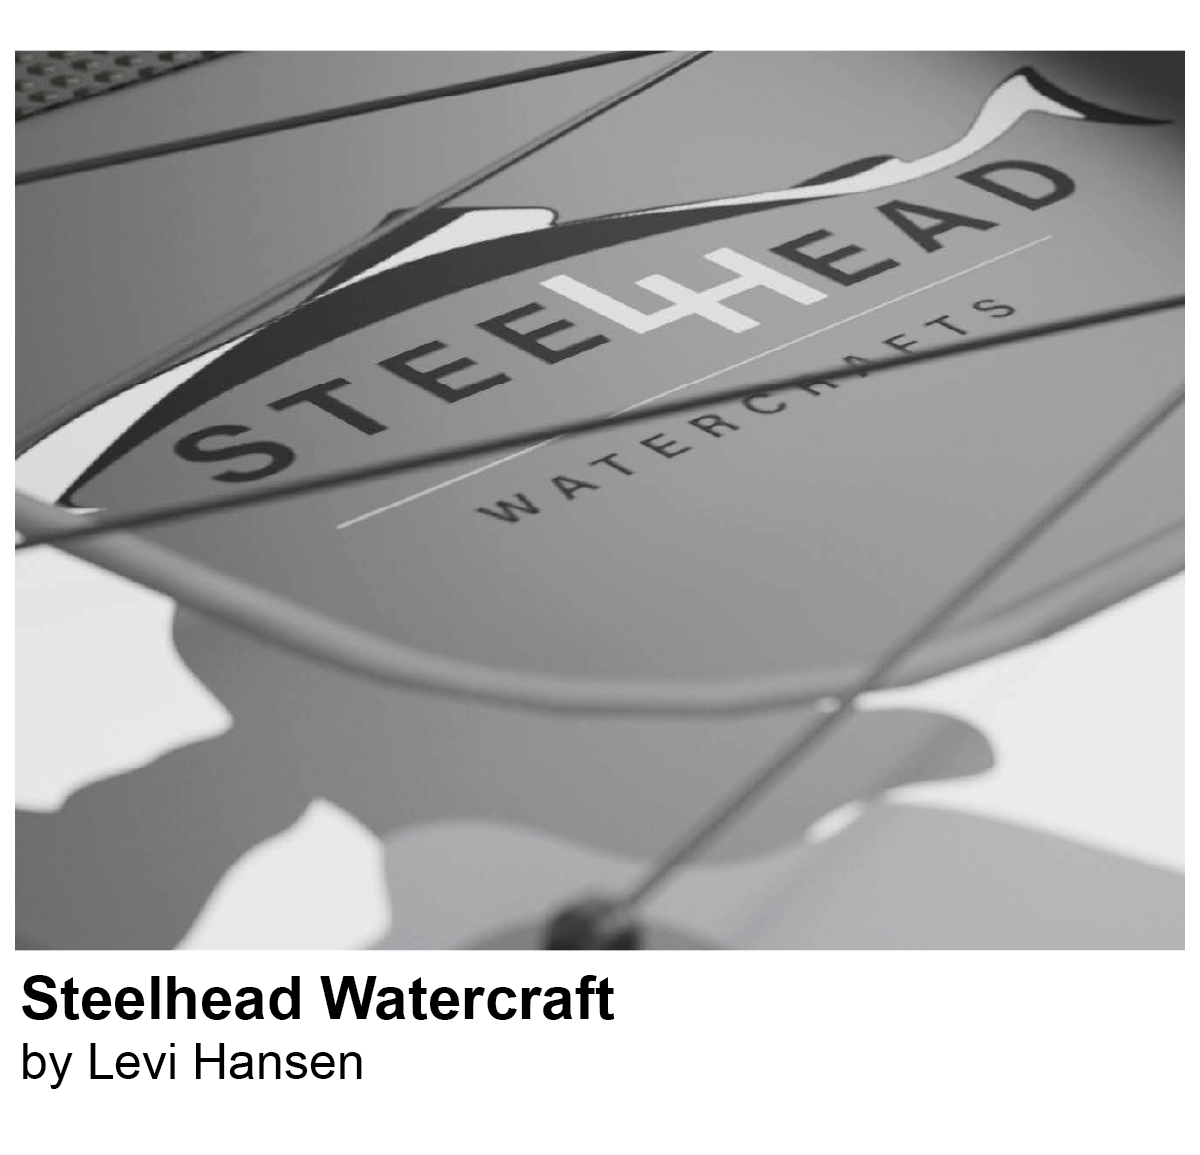 Steelhead Watercraft by Levi Hansen